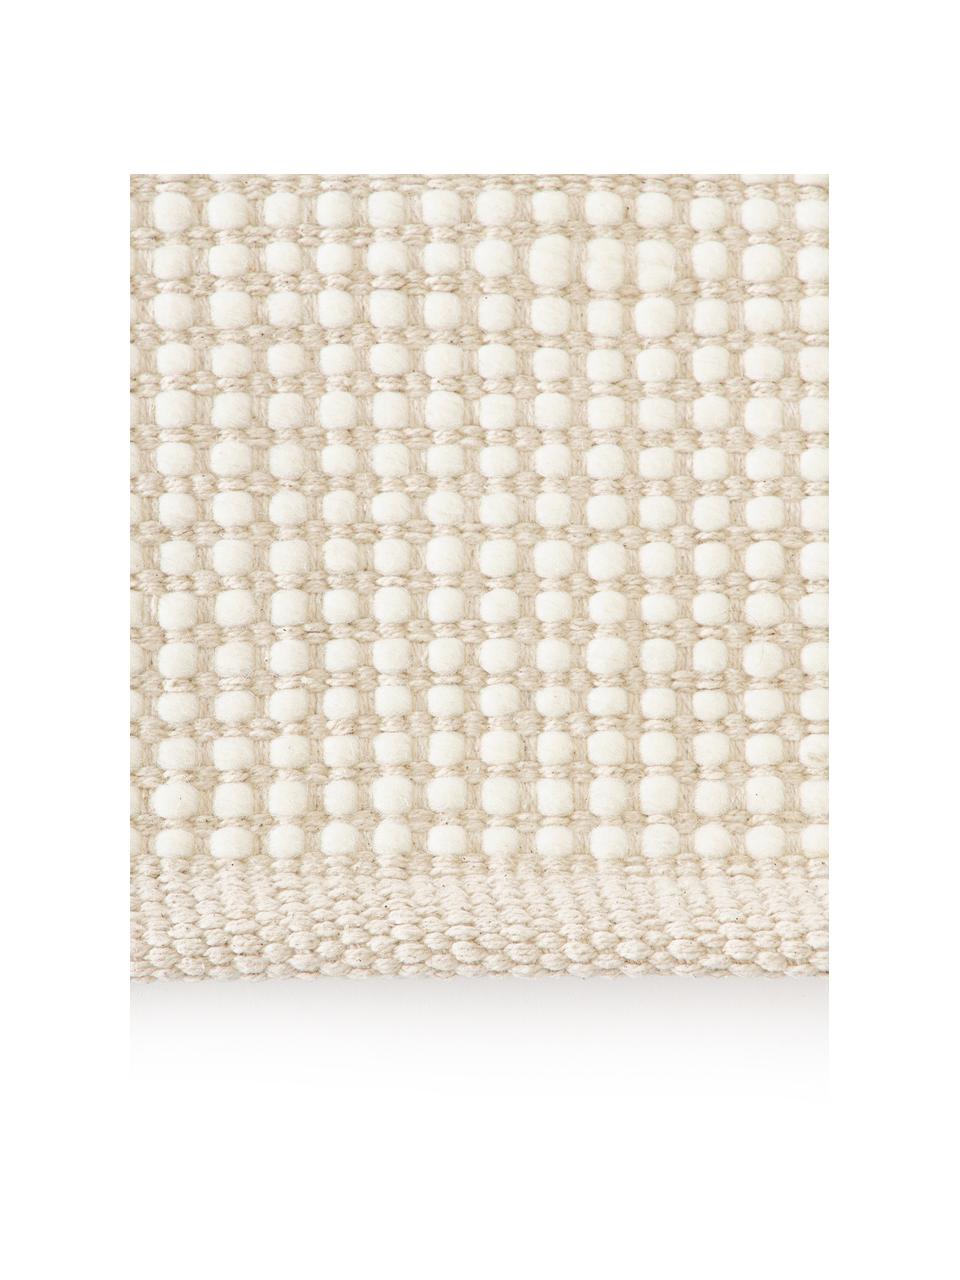 Passatoia in lana tessuta a mano Amaro, Retro: 100% cotone, certificato , Bianco crema, Larg. 80 x Lung. 200 cm